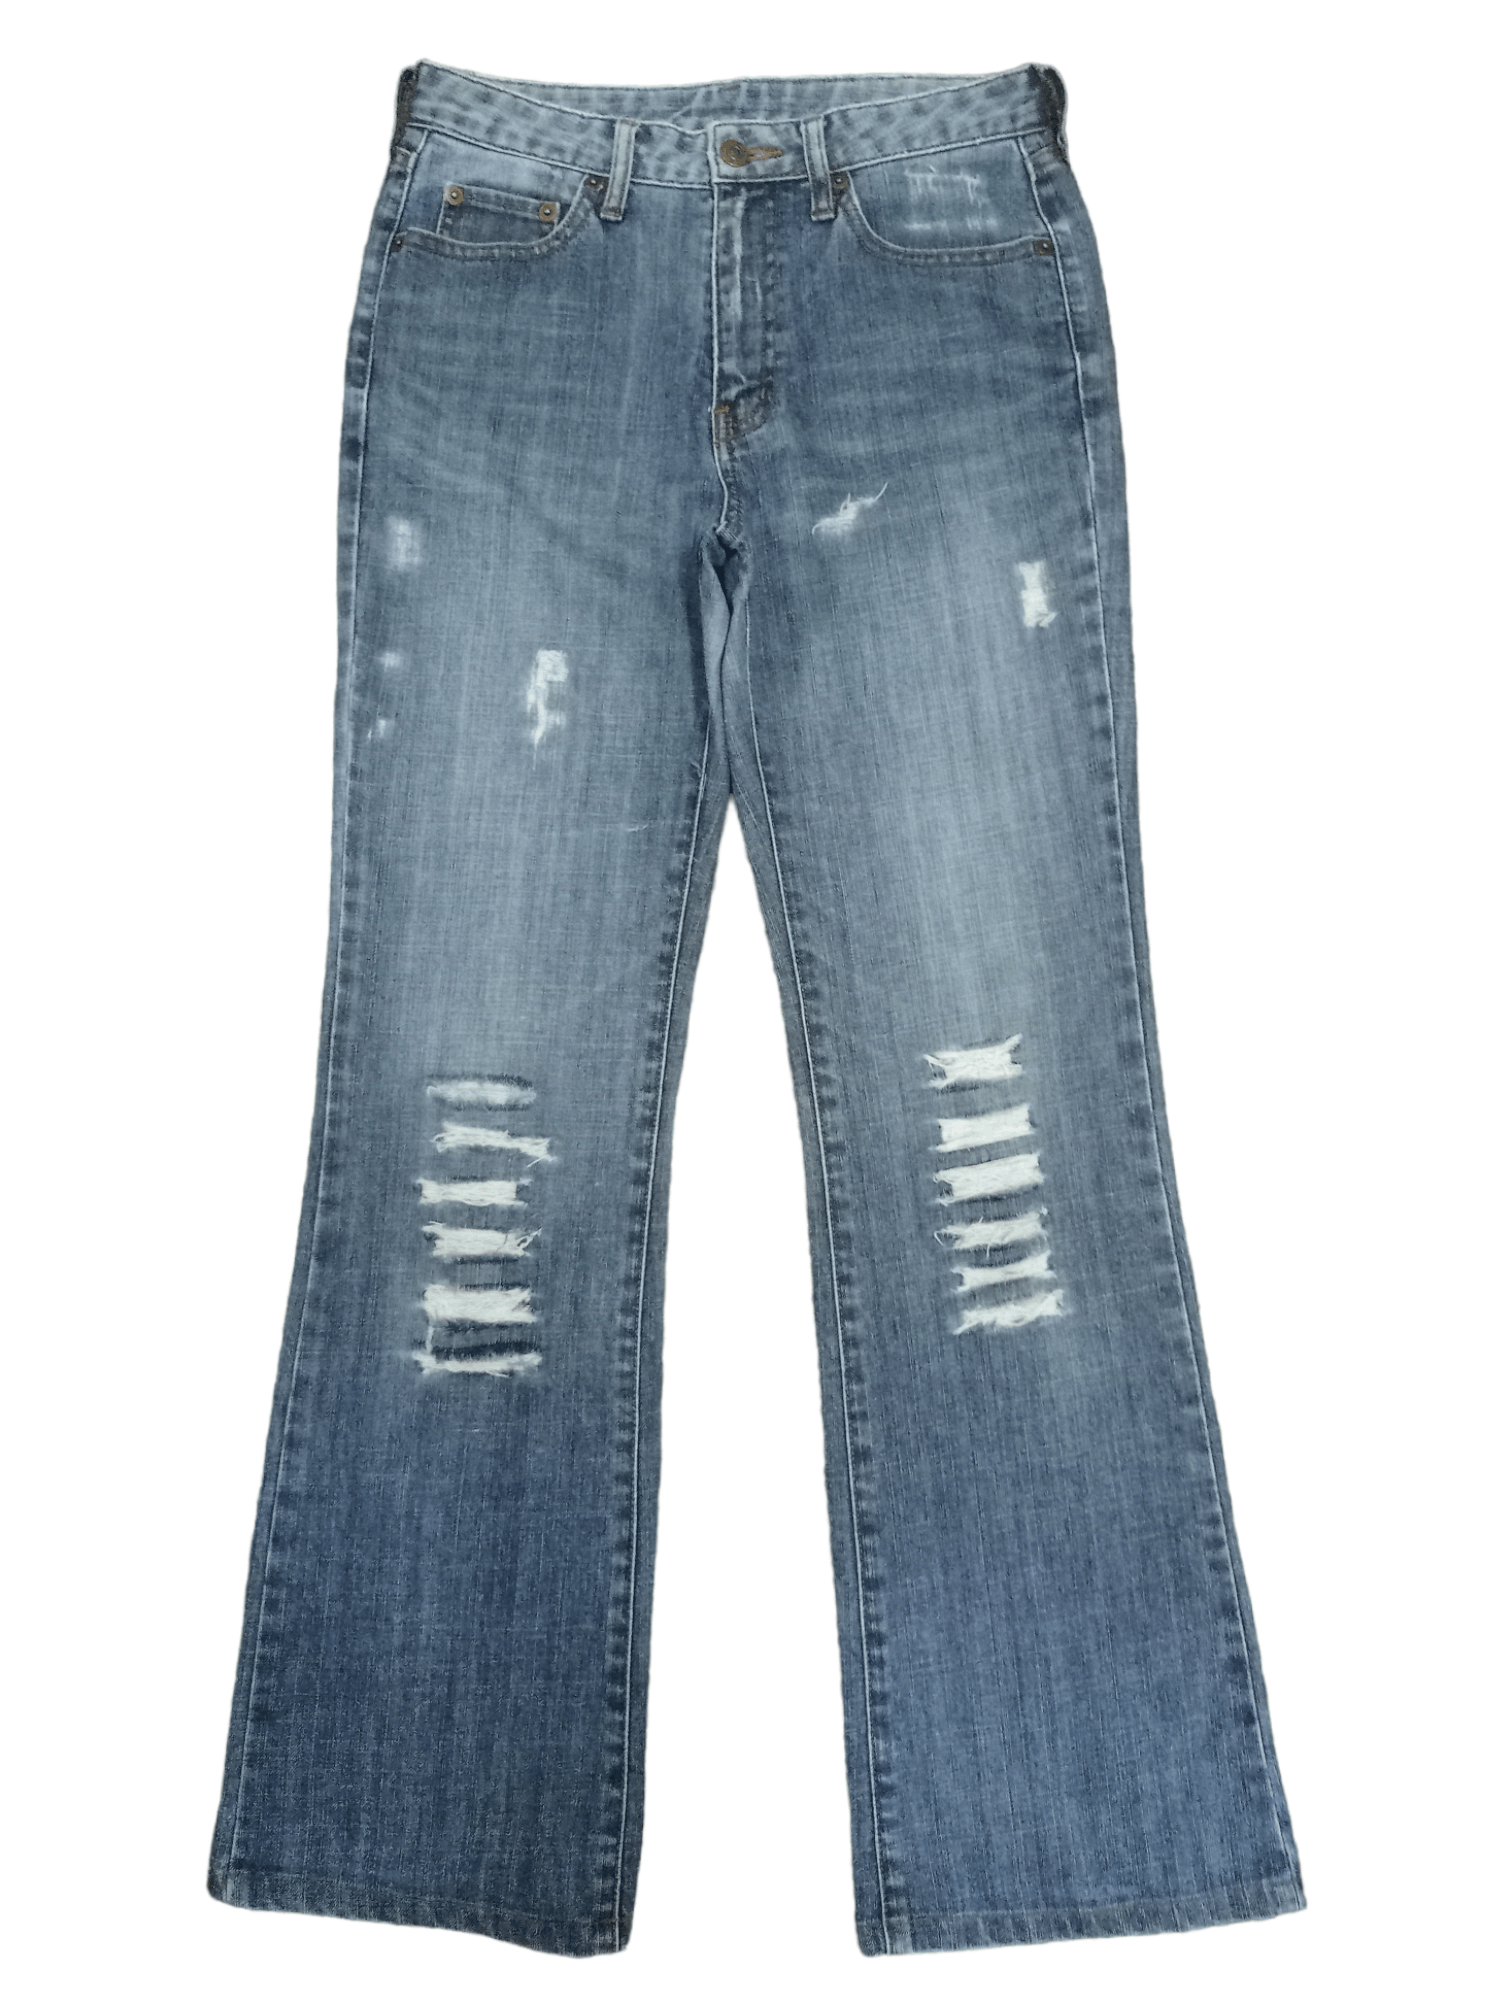 Uniqlo Vintage Japanese Uniqlo Blue Wash Flare Jeans 27x29 Size US 27 - 1 Preview